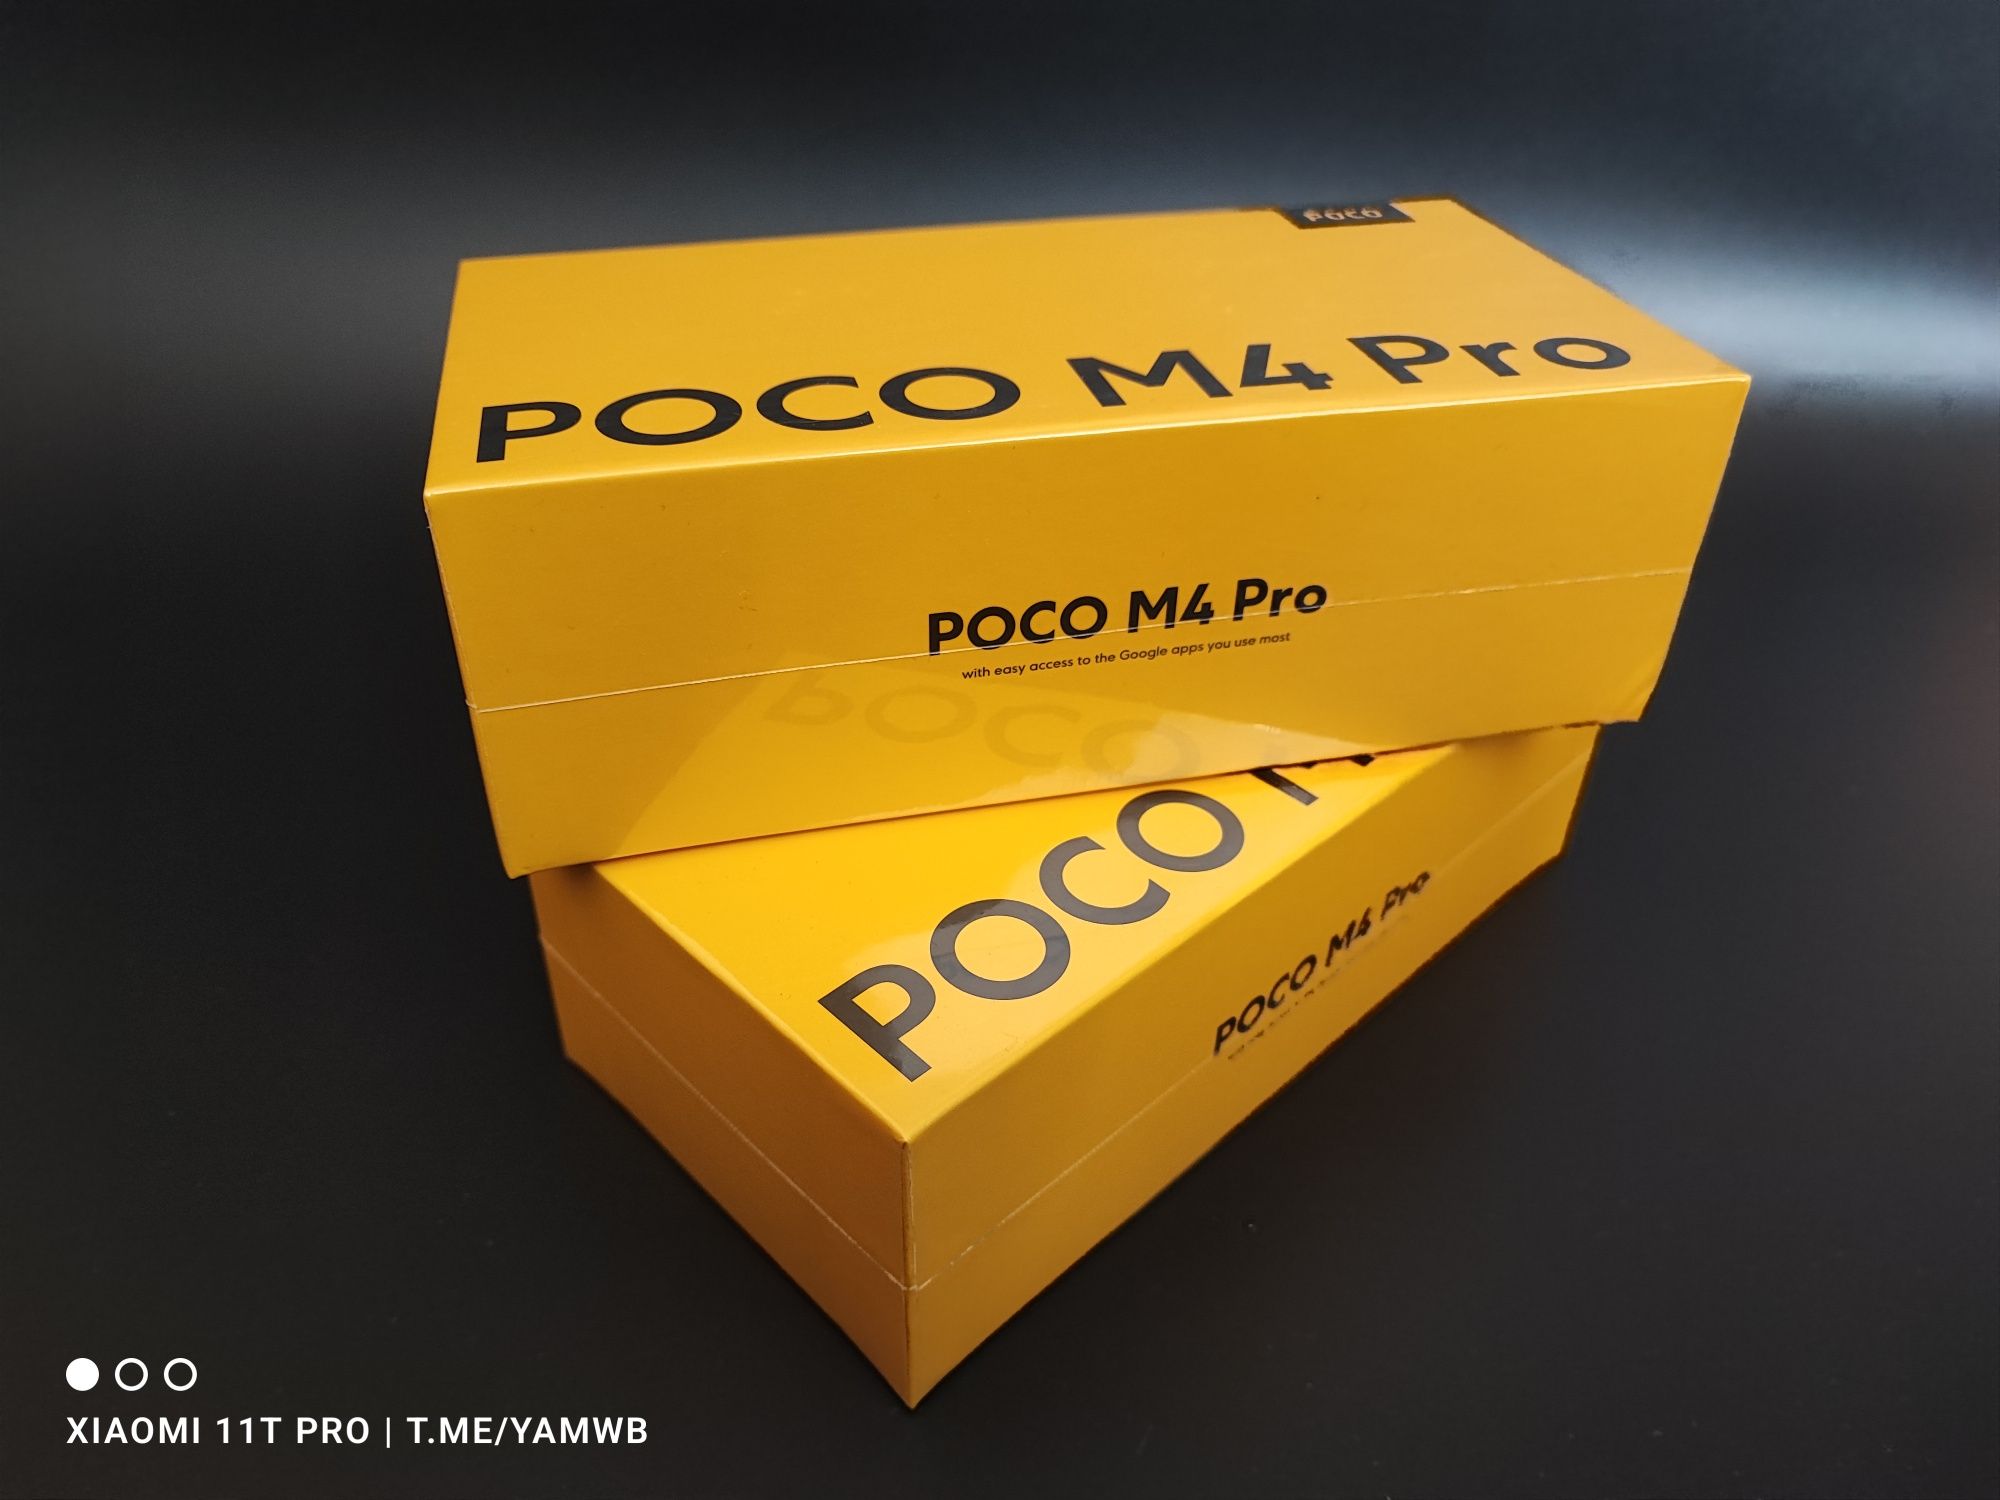 Poco M4 Pro 4G NFC